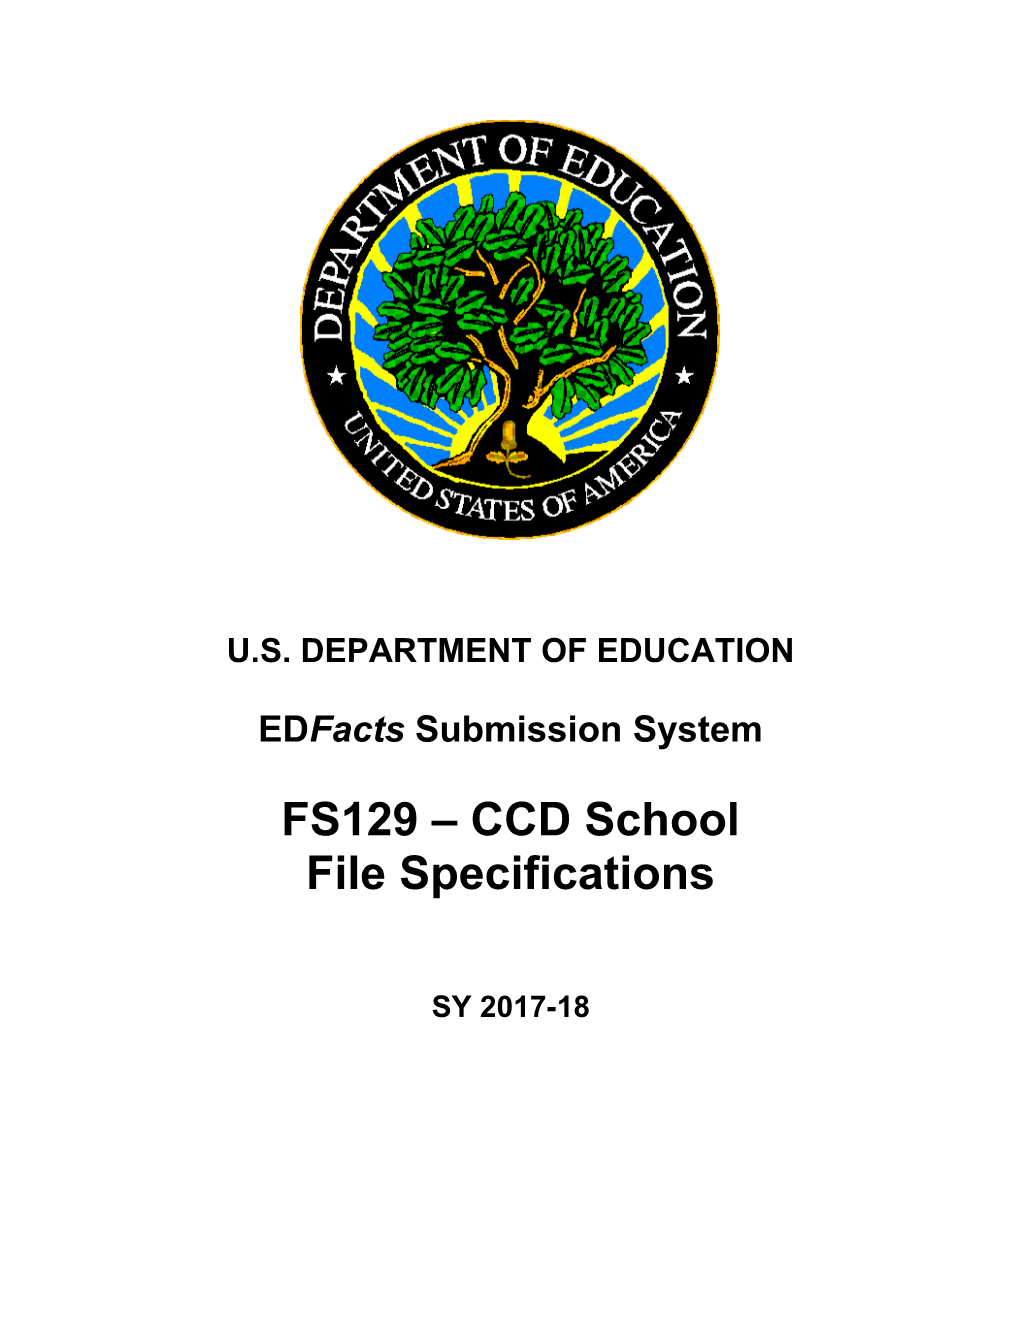 FS129 - CCD School File Specifications (Msword)